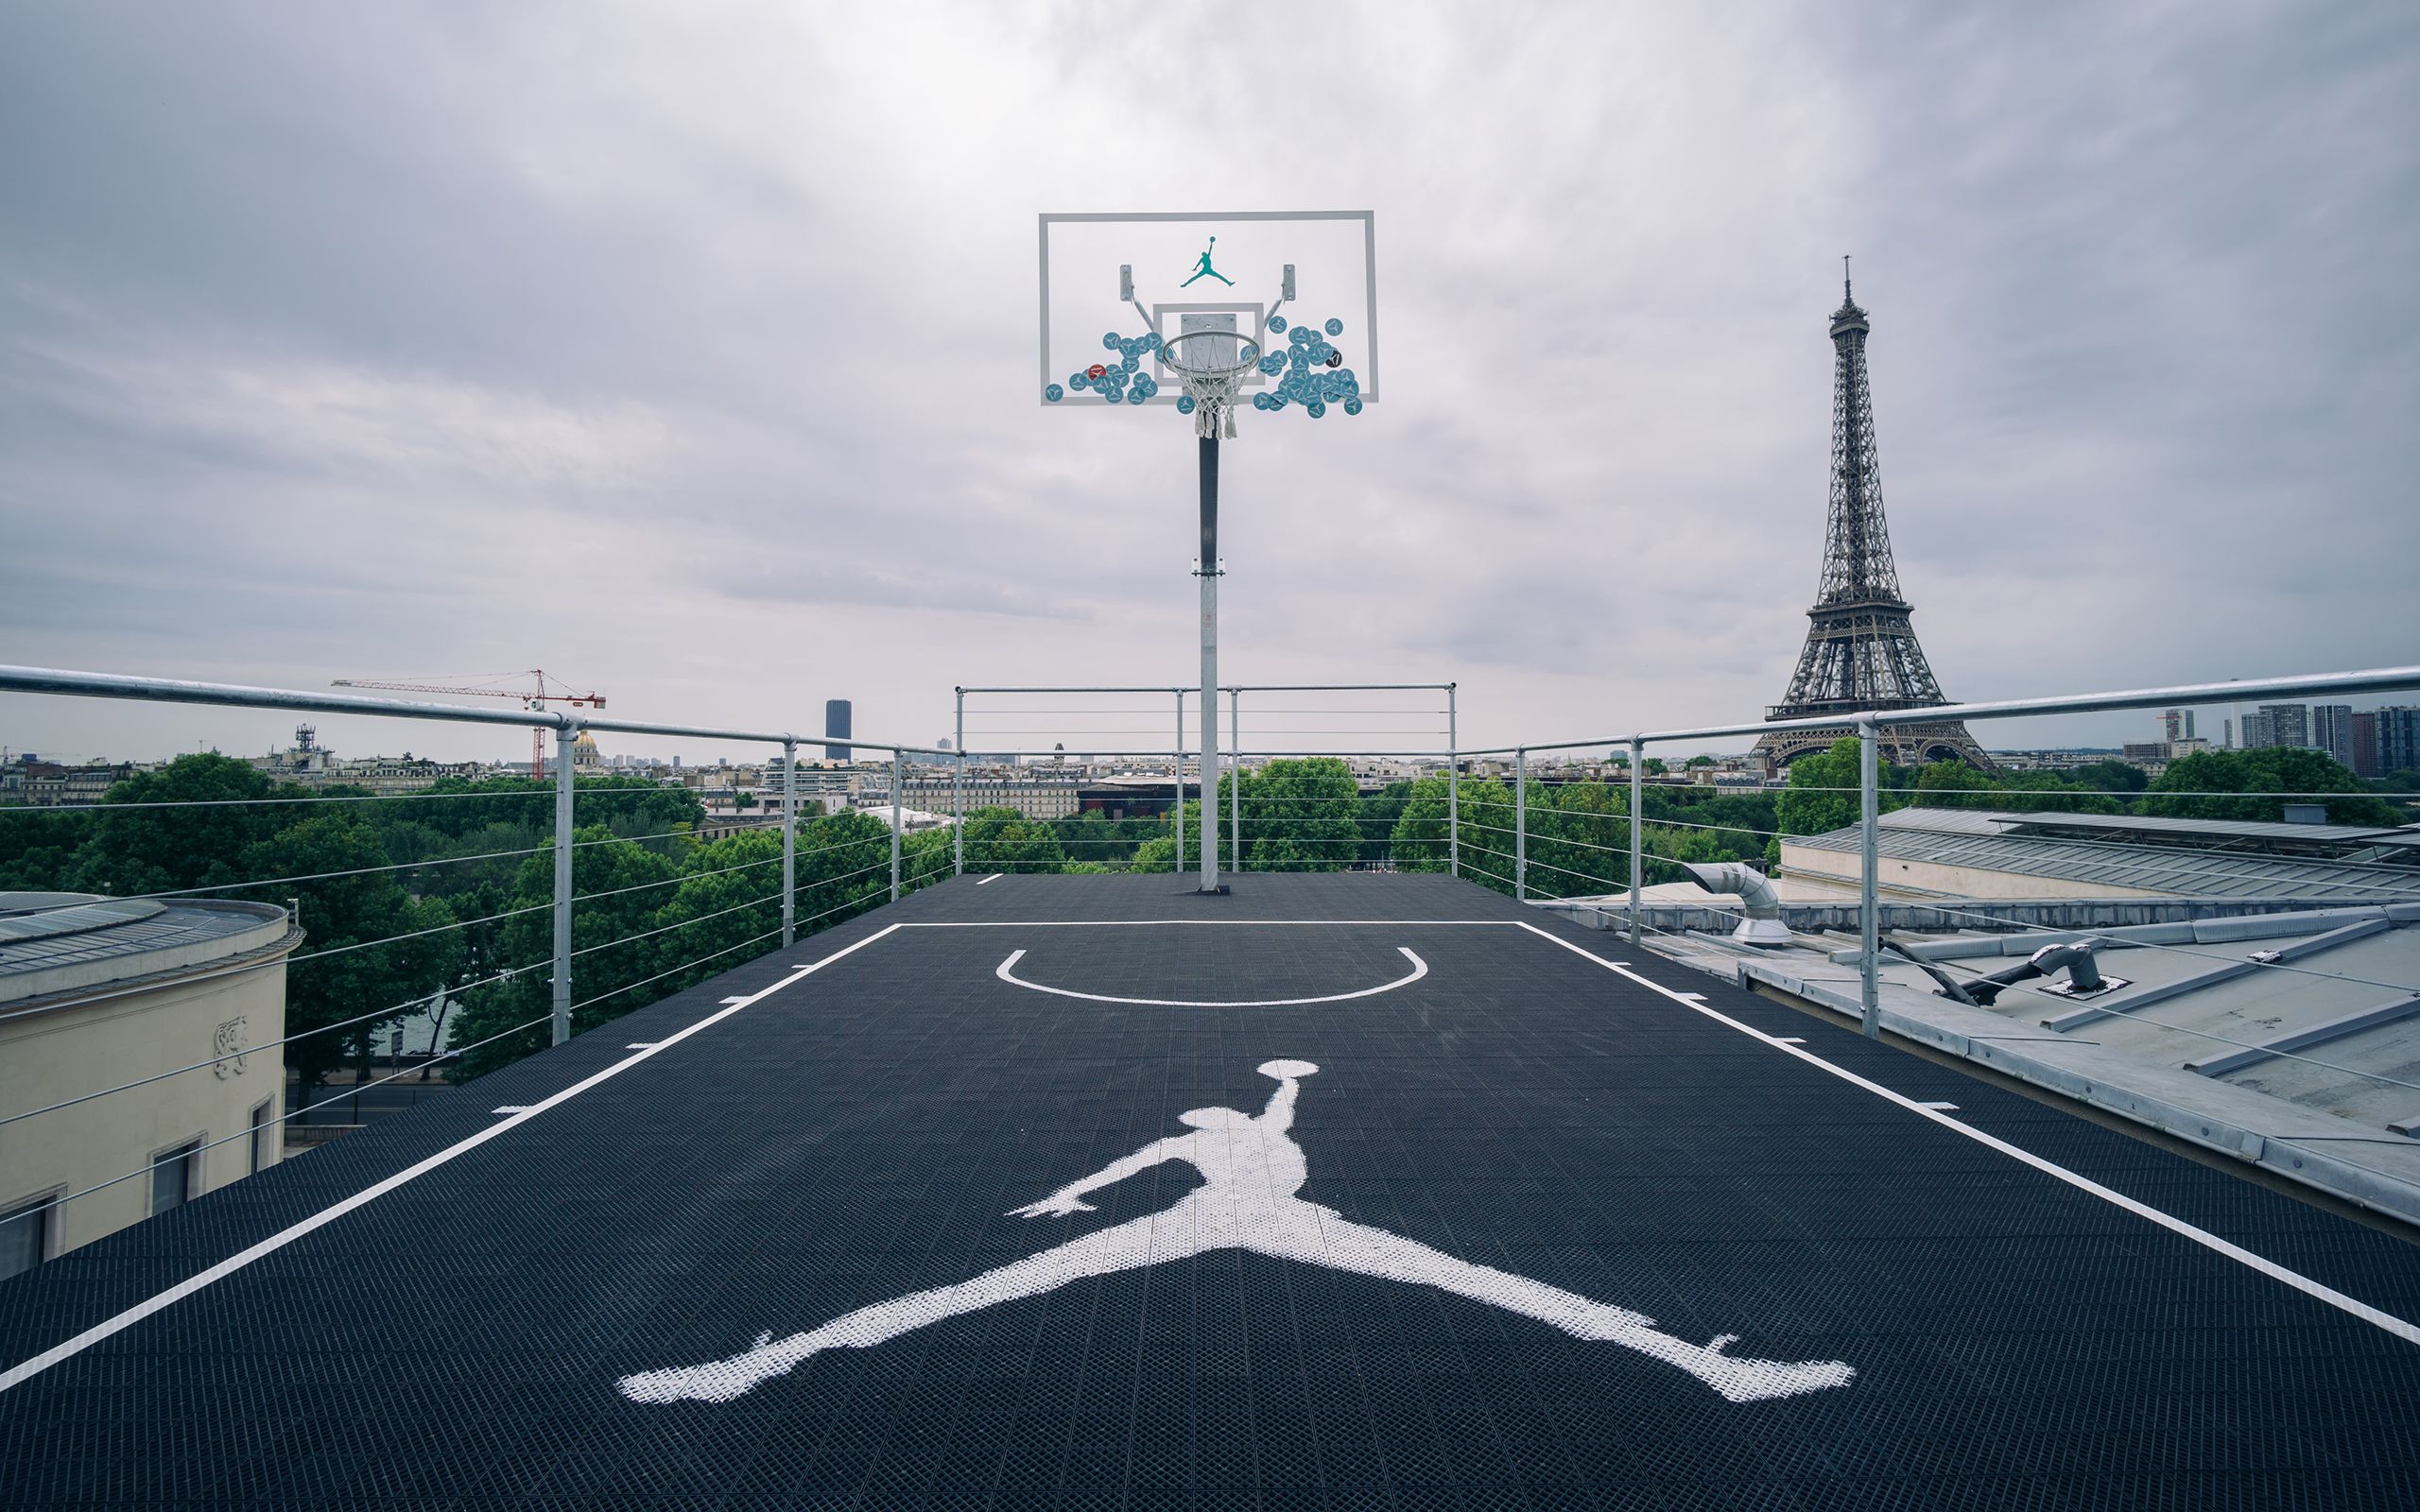 Basketball Court Background. Basketball Emoji Wallpaper, Best Basketball Wallpaper and Sick Basketball Wallpaper